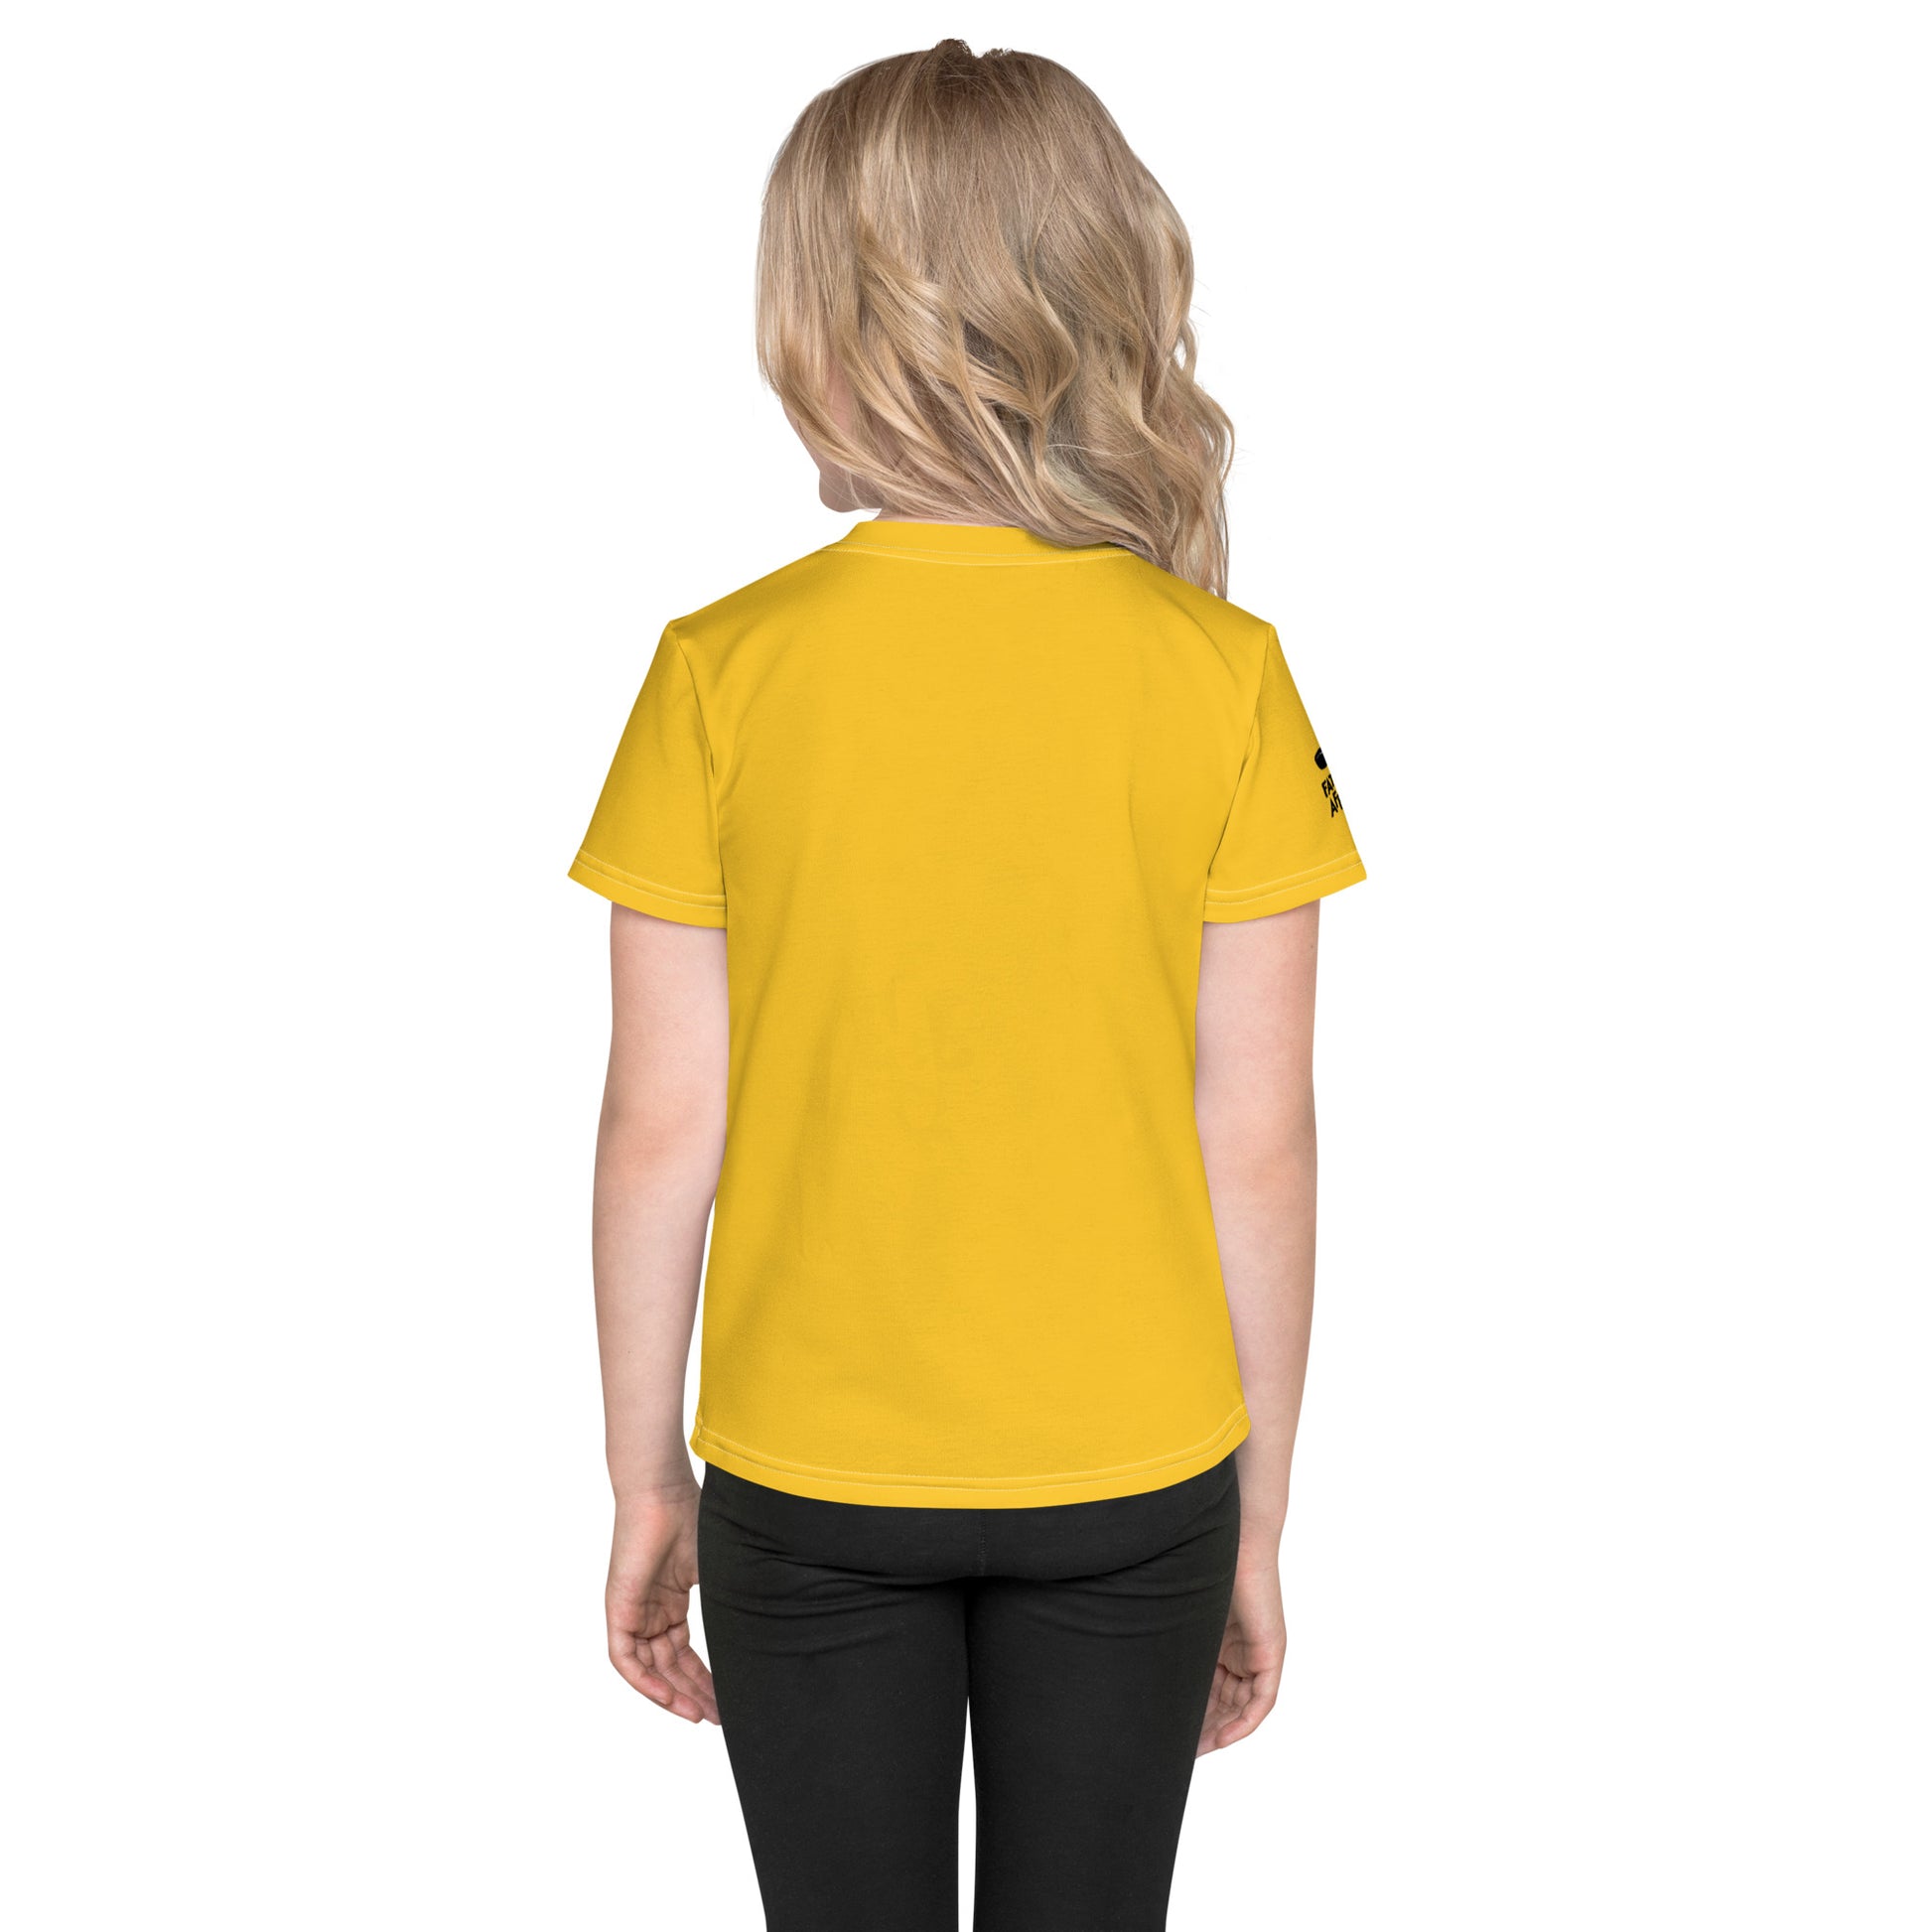 Yellow kids t-shirt with cat print